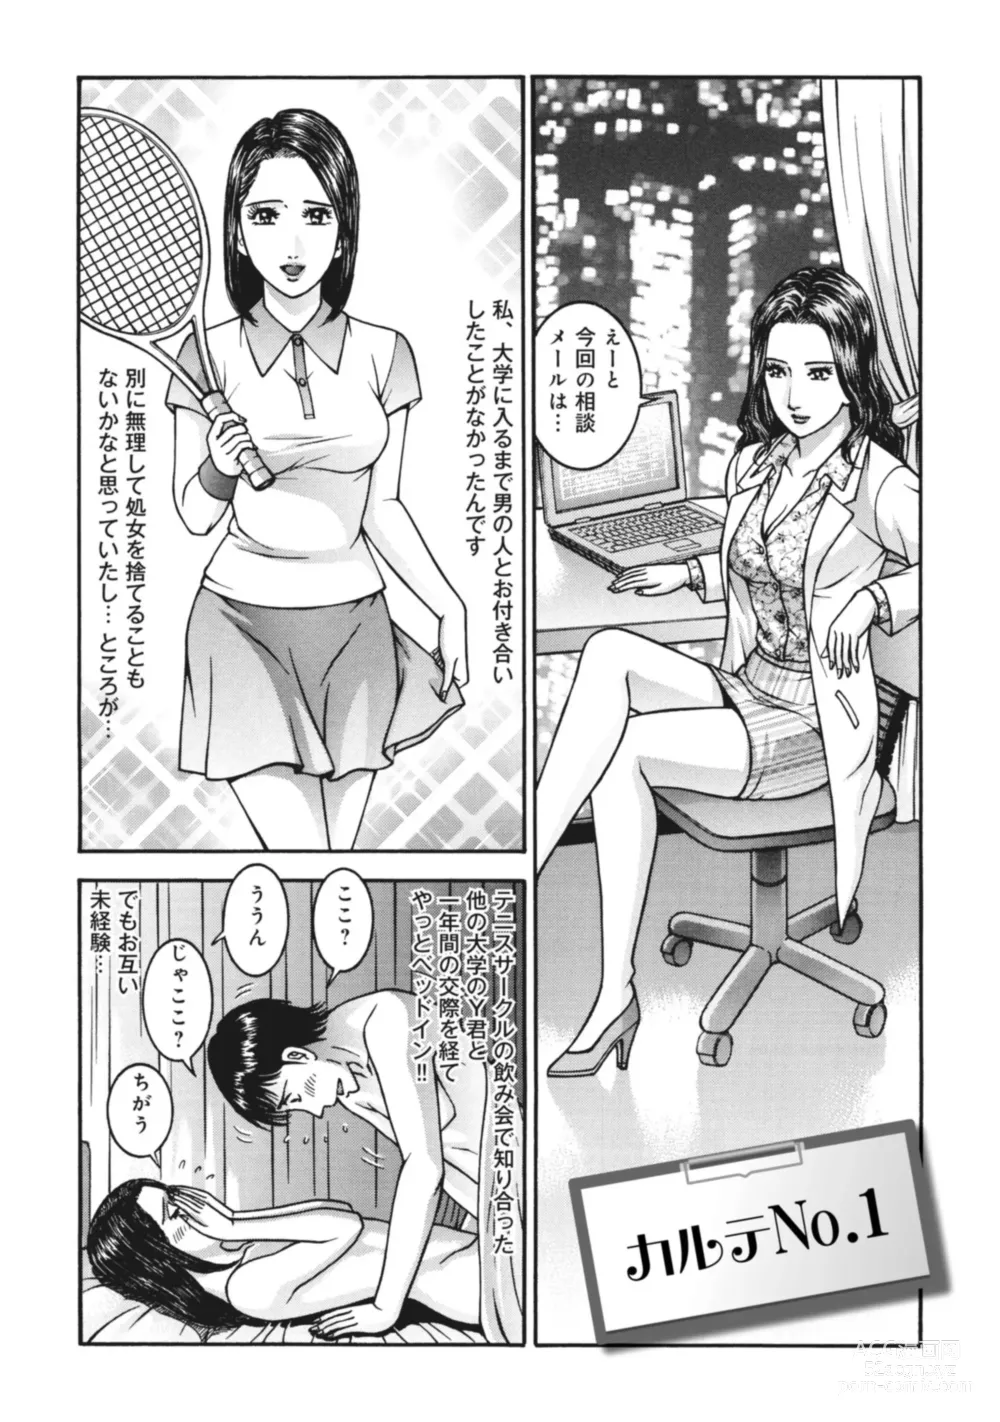 Page 4 of manga Renai Kaunserā Maki no Teisō Fairu 1